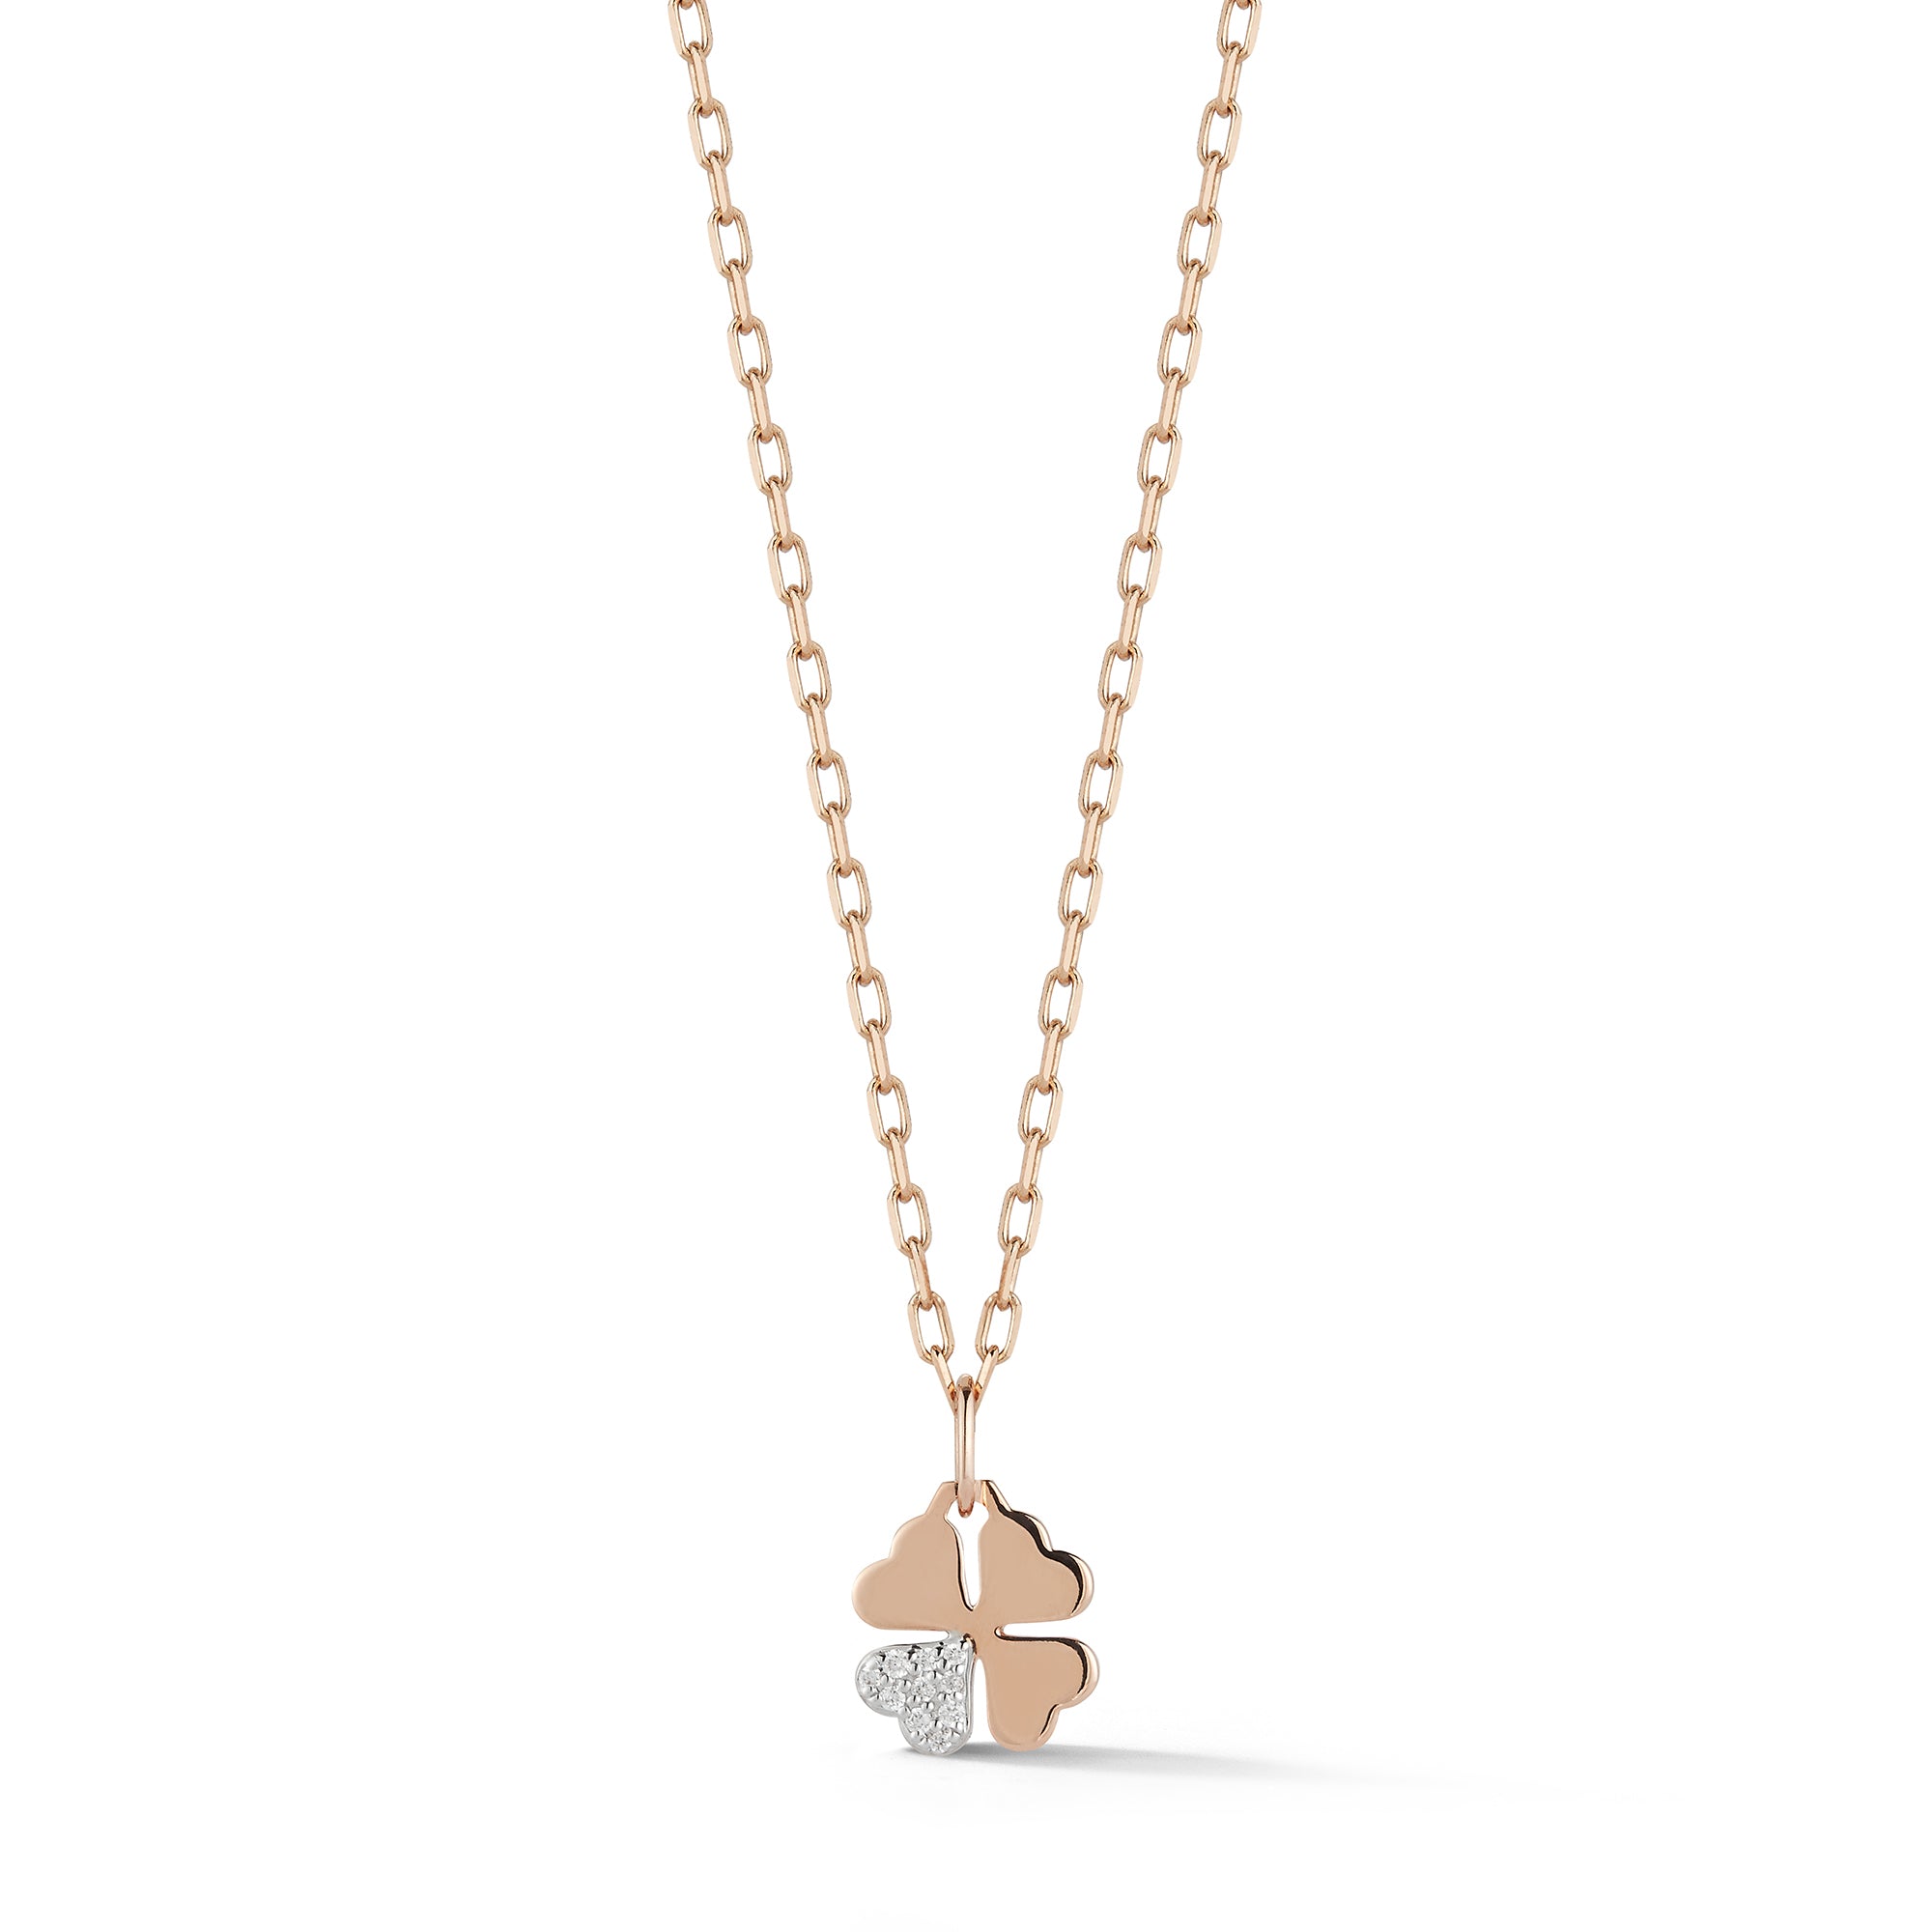 Clover Necklace / Rose Gold Clover Necklace / Tiny Clover 